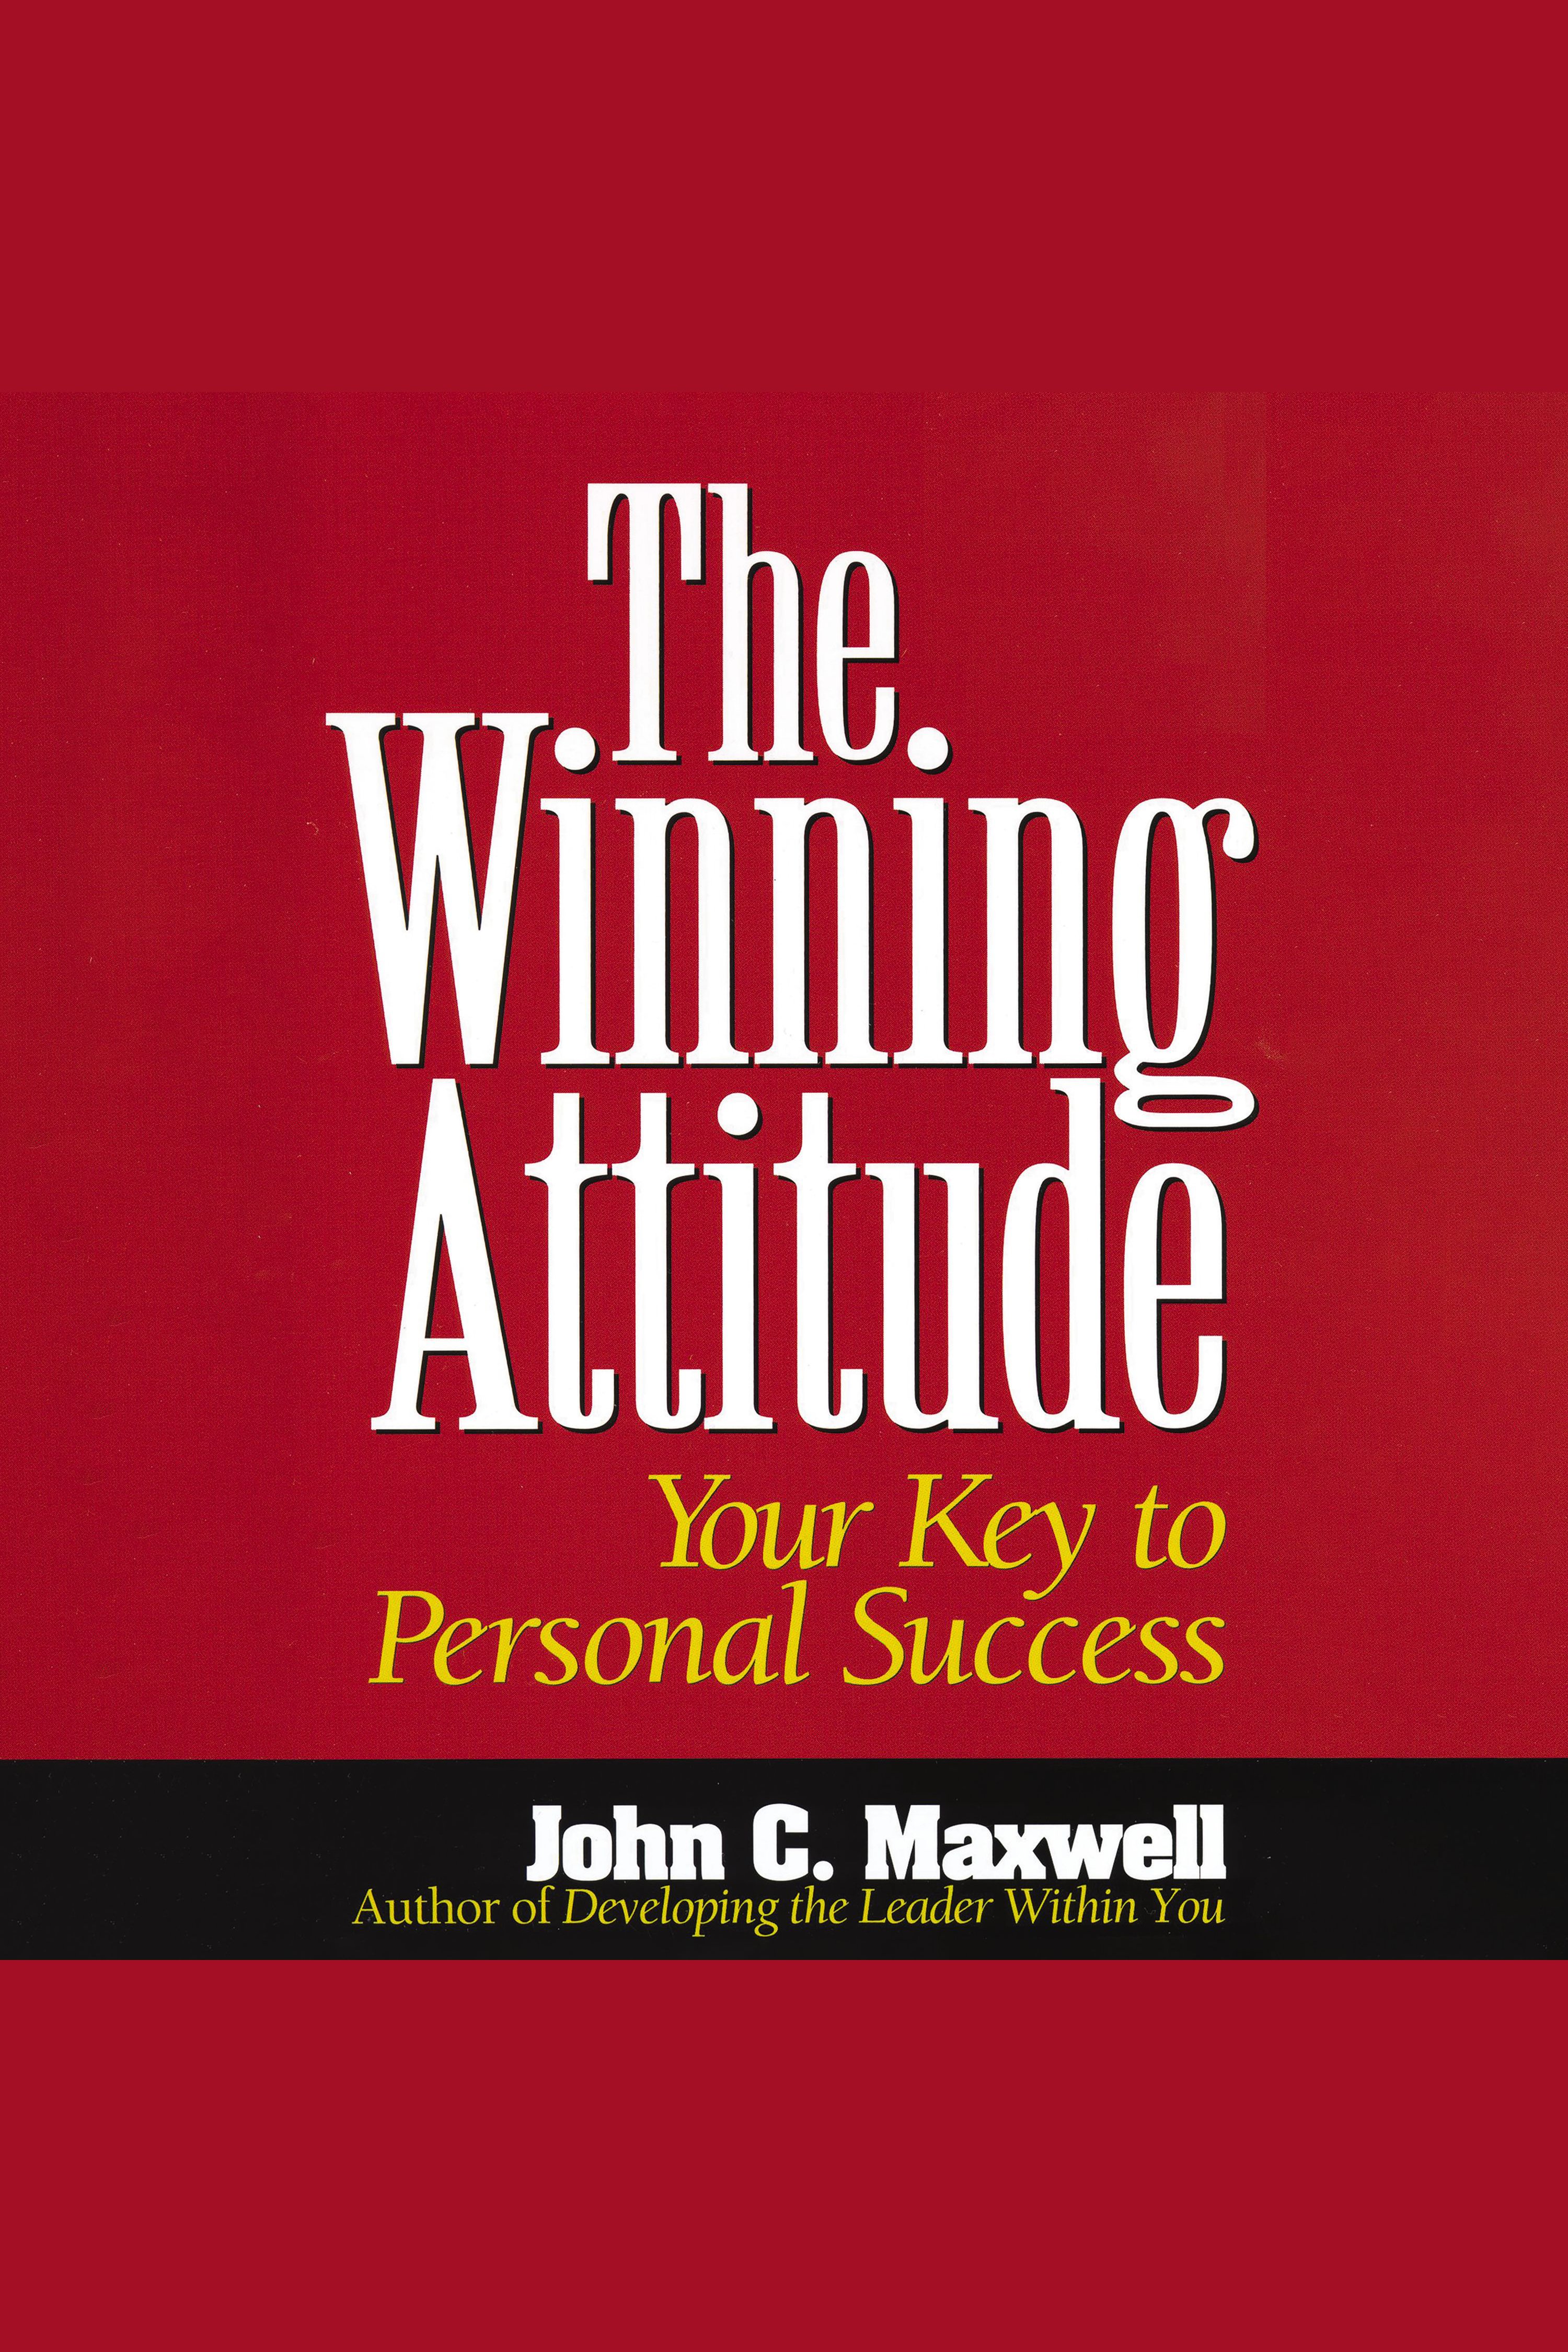 The winning attitude cover image